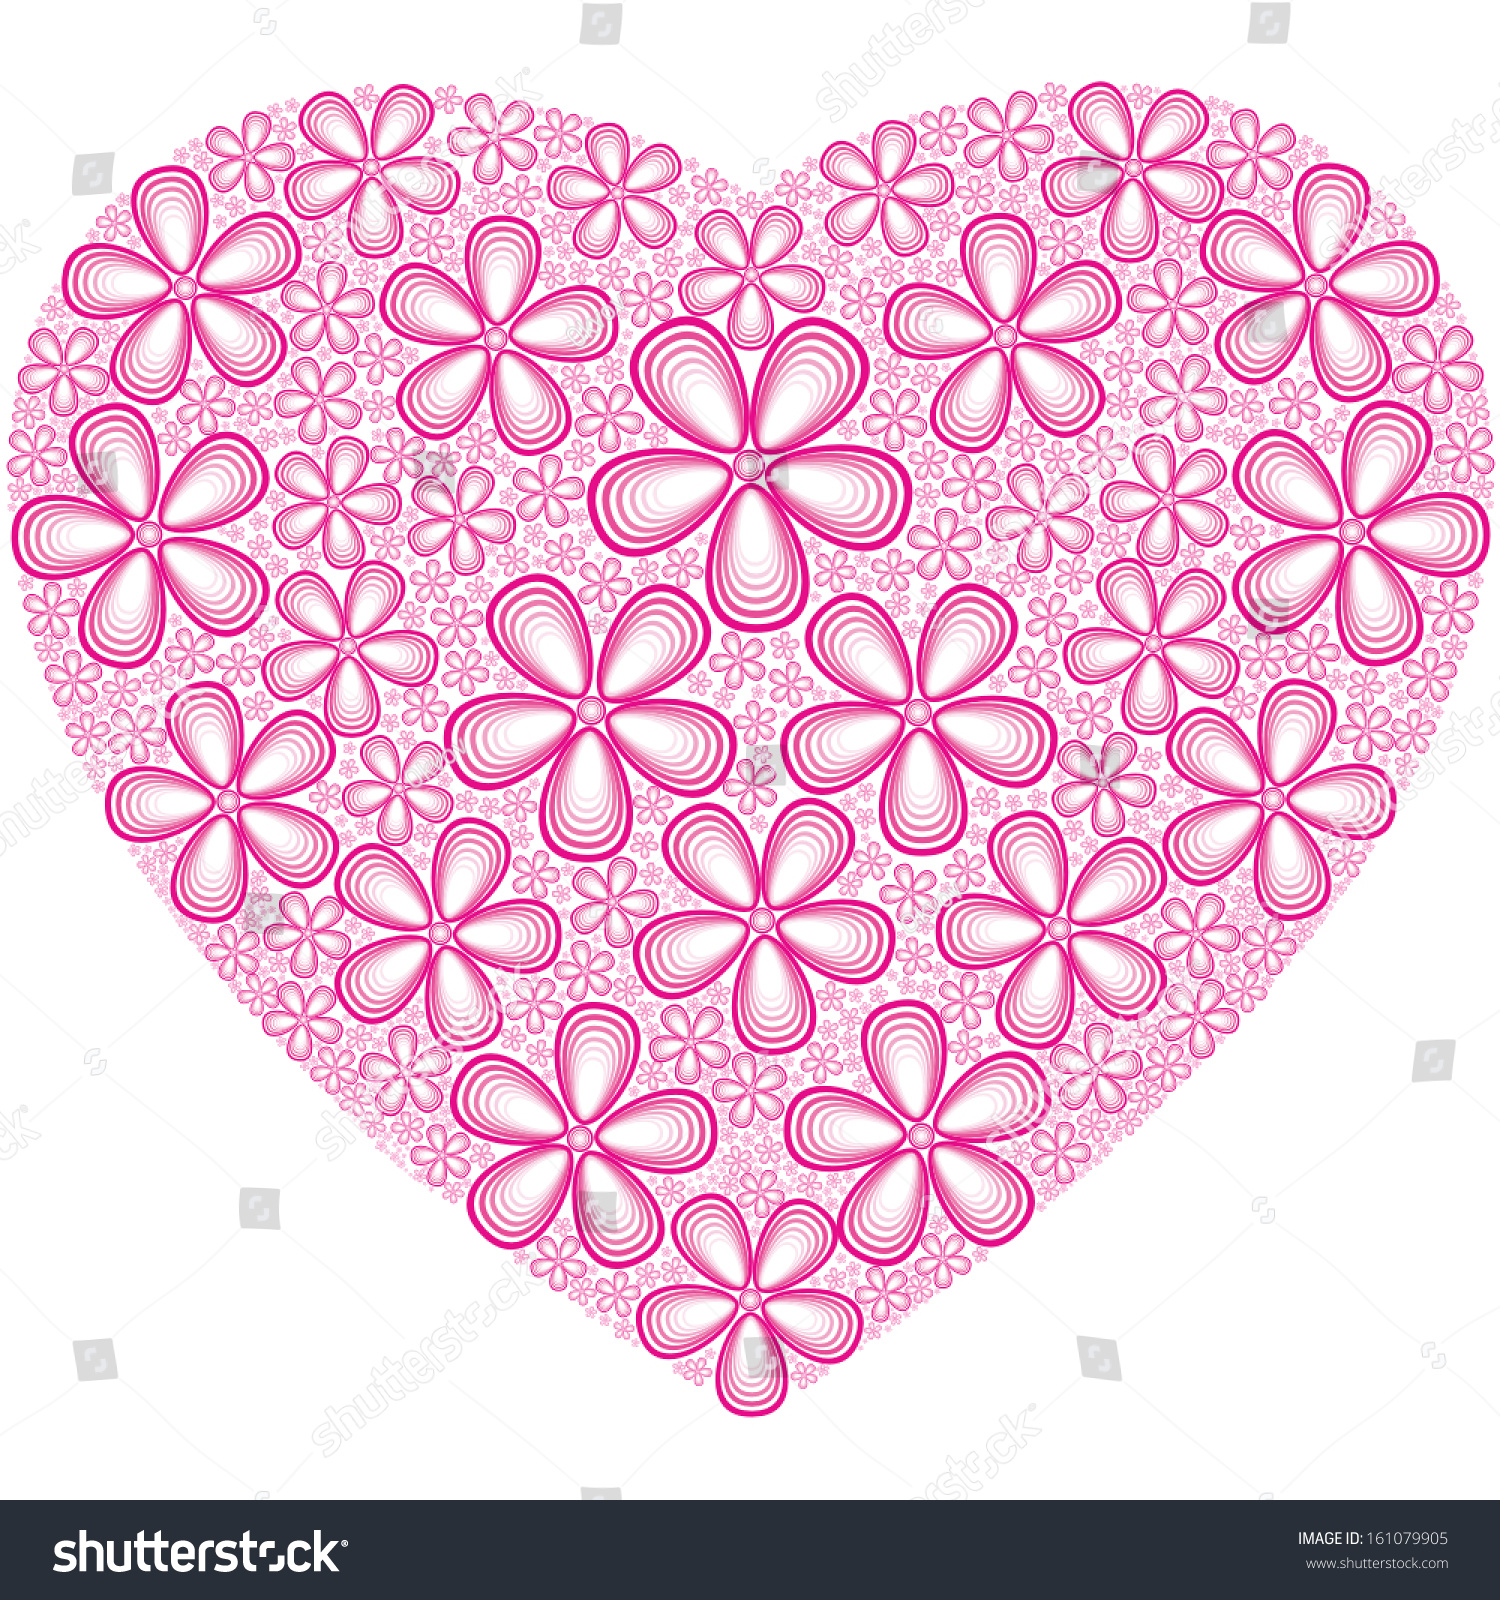 Vector Flowers Heart Stock Vector 161079905 - Shutterstock